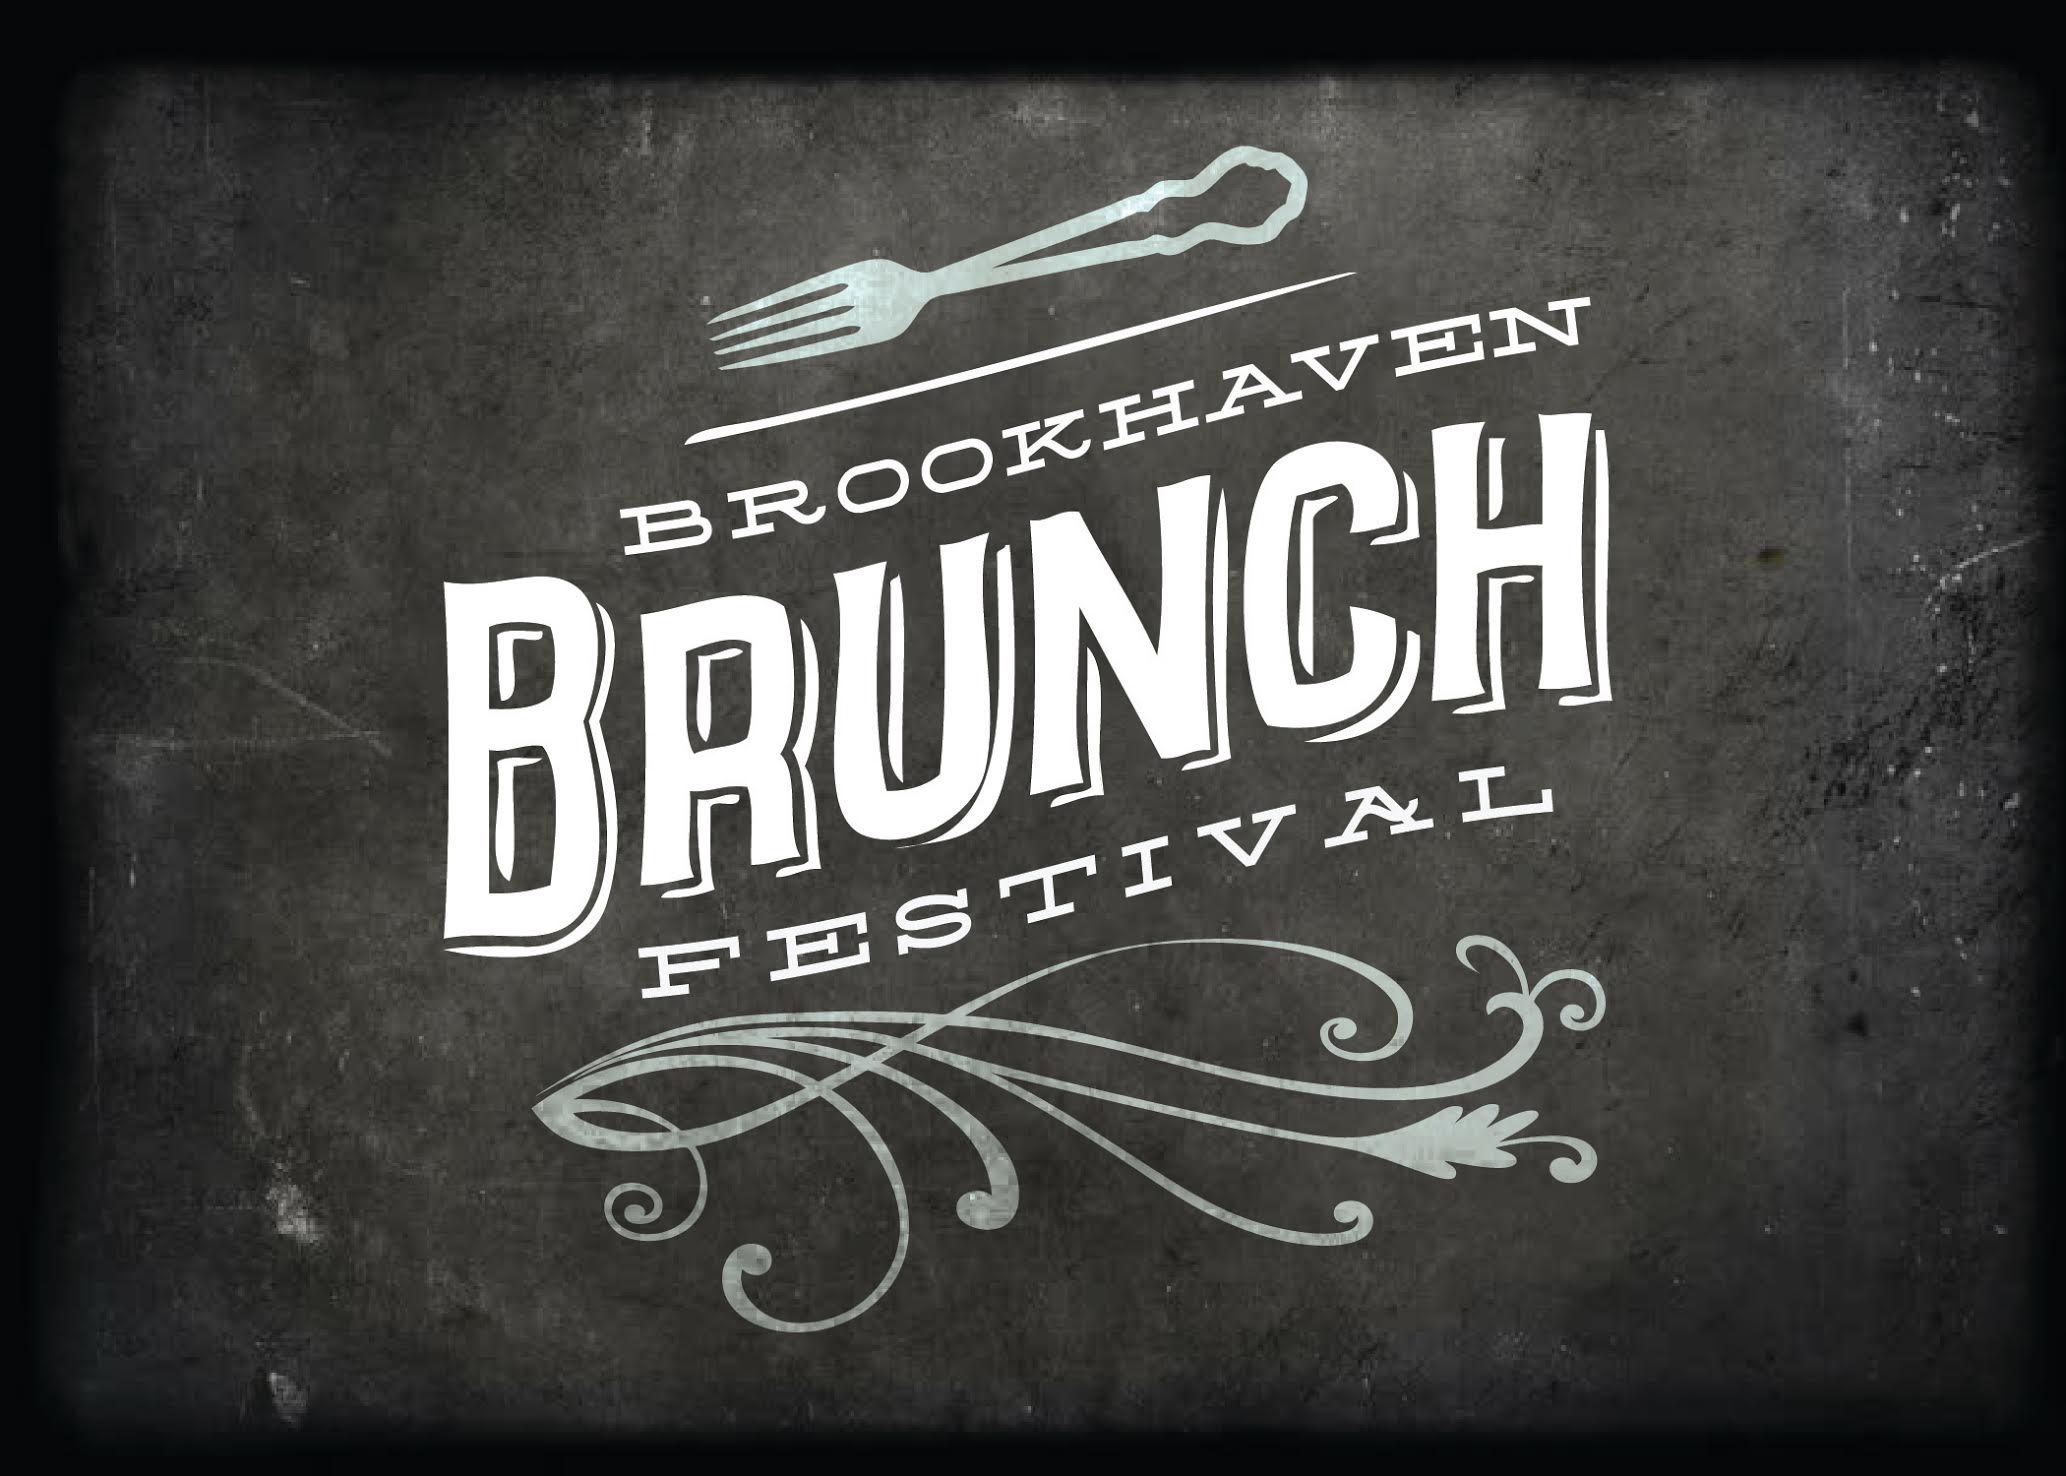 Brookhaven Brunch Festival